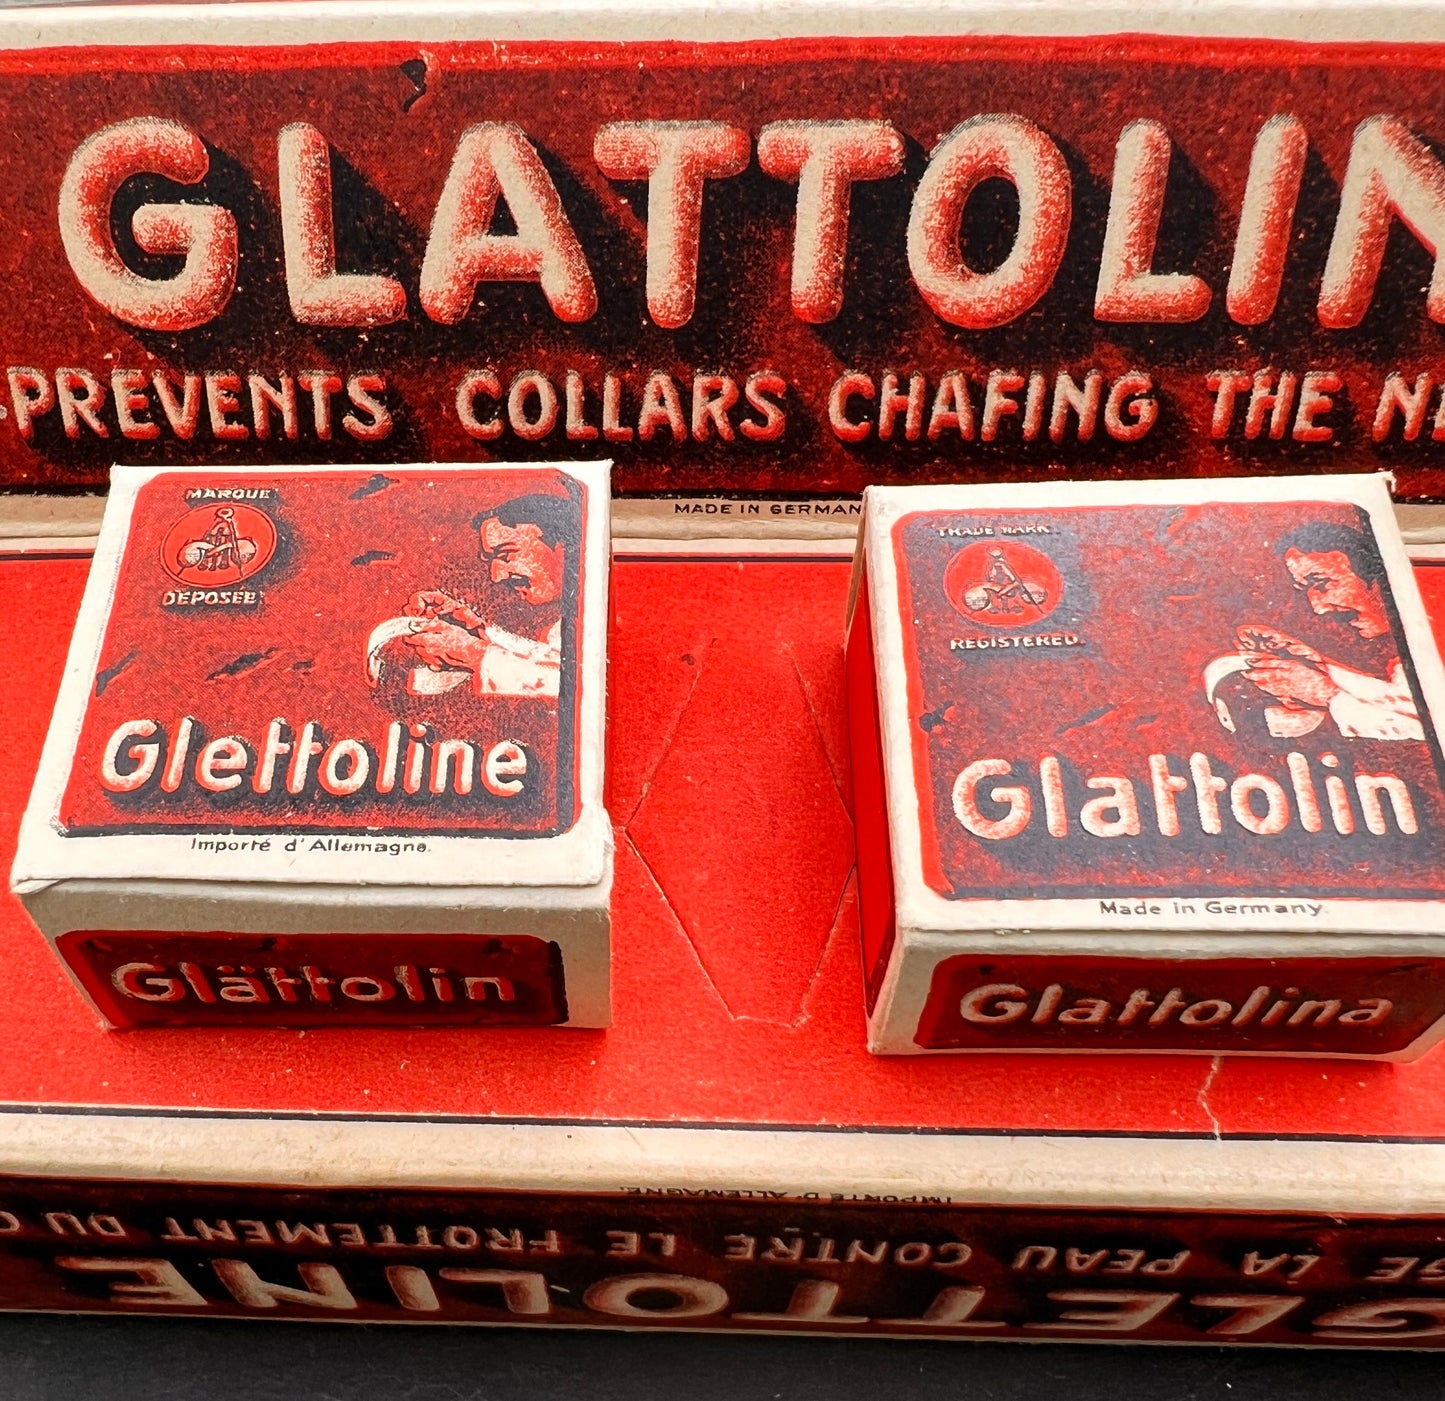 Unused Box of 1930s GLATTOLIN to Prevent Skin Chafing !